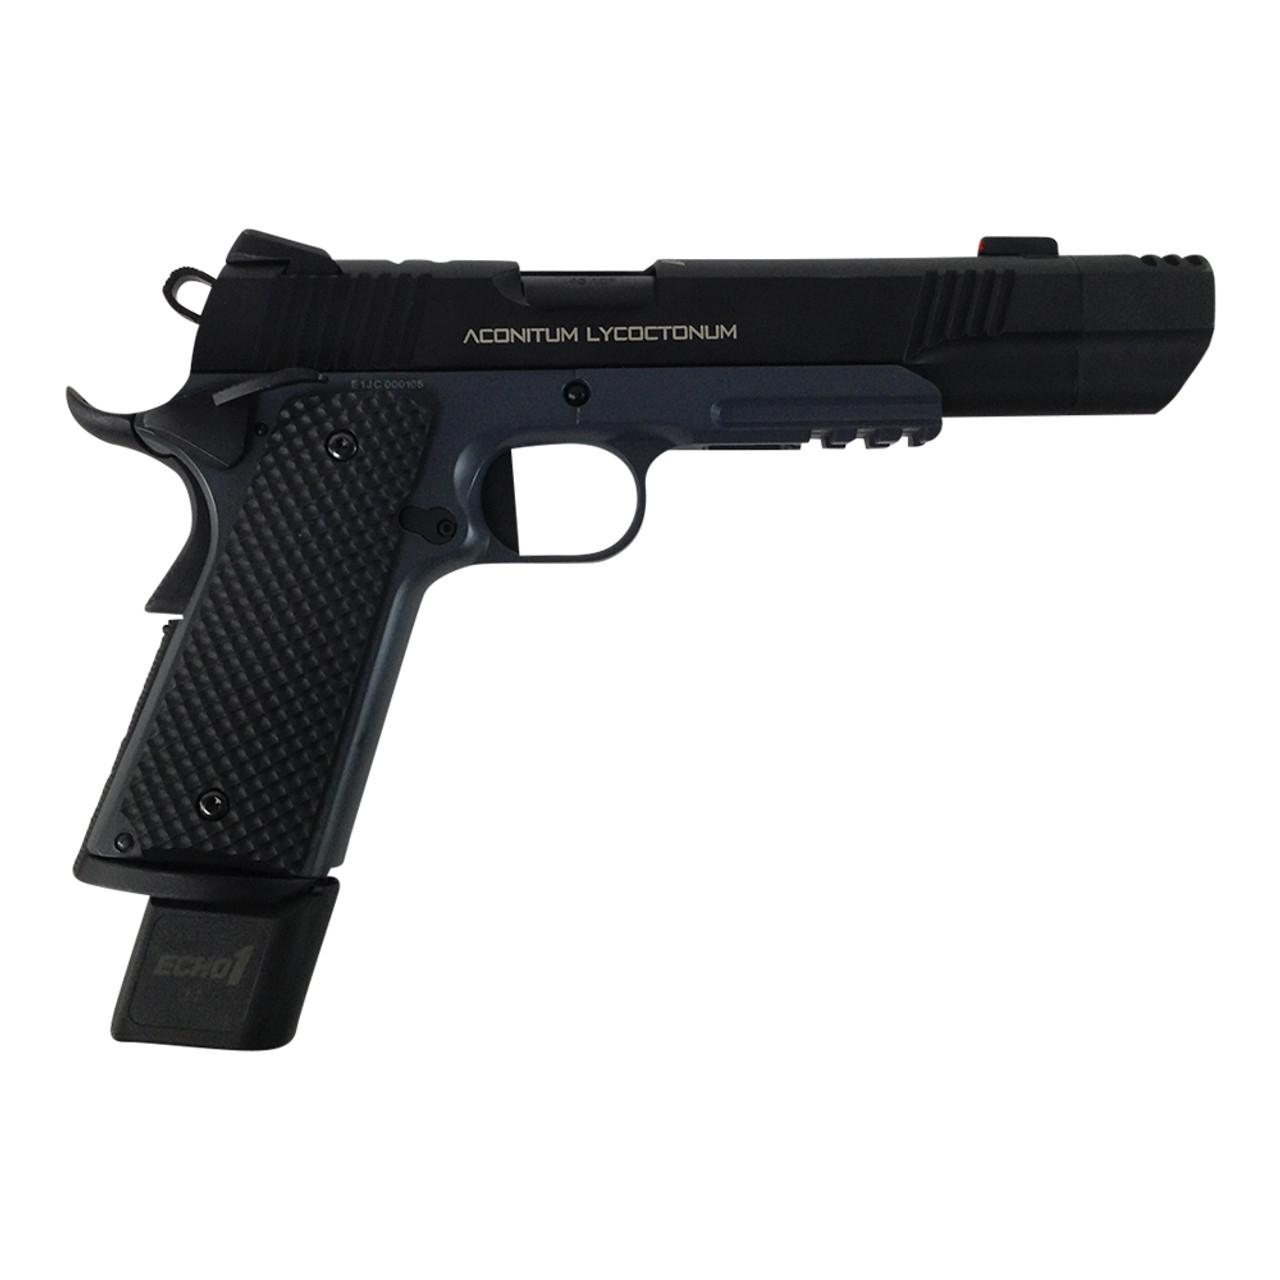 FULLMETAL 1911 Airsoft Pistol Handgun model # GFM311 by Game Face Made In USA 